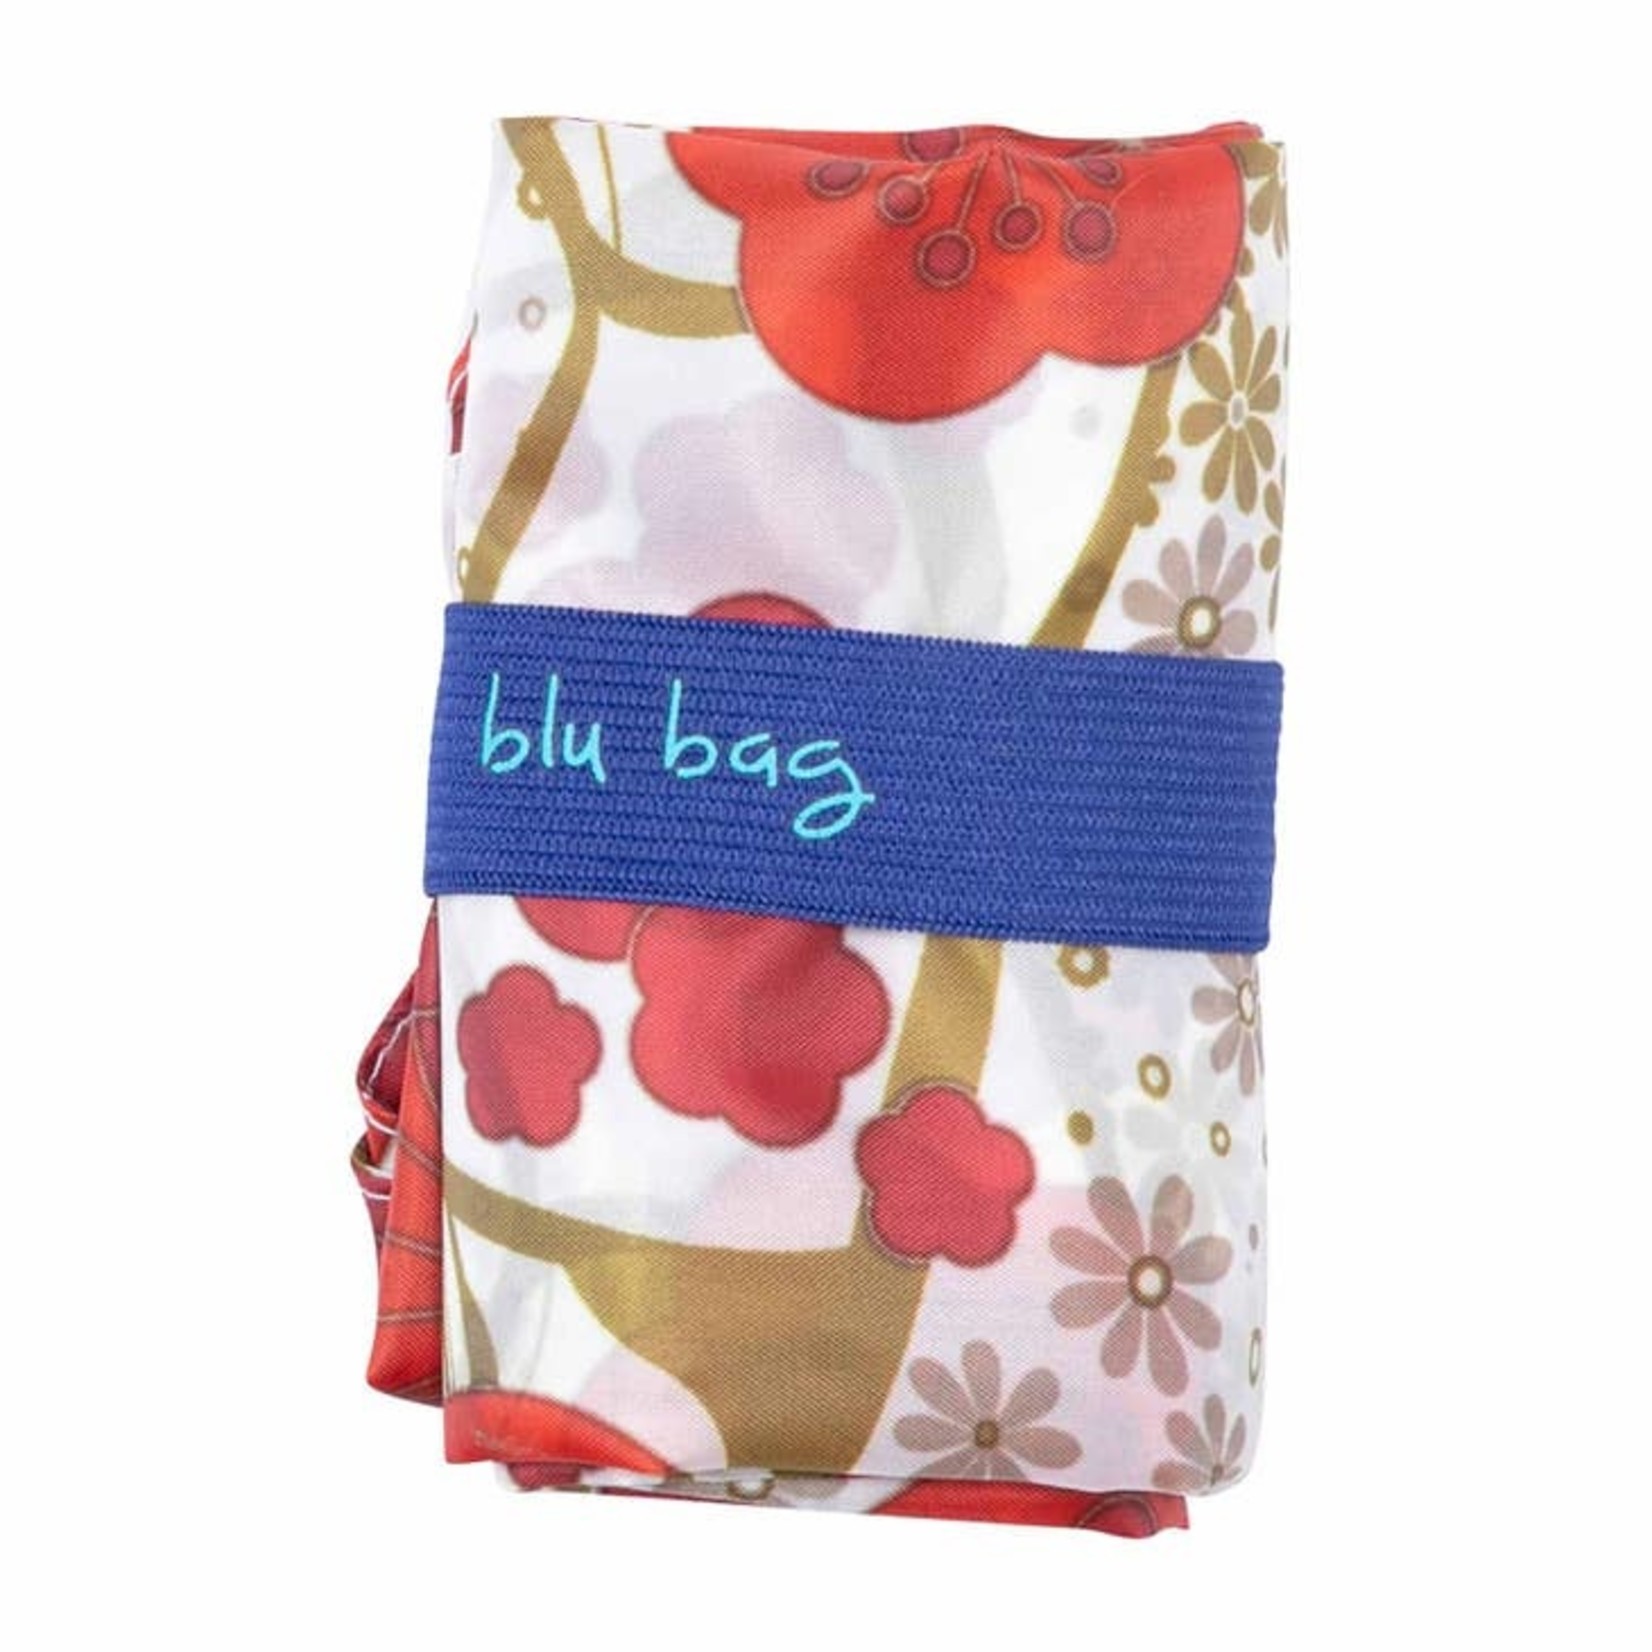 Blu Bag in Kintsugi